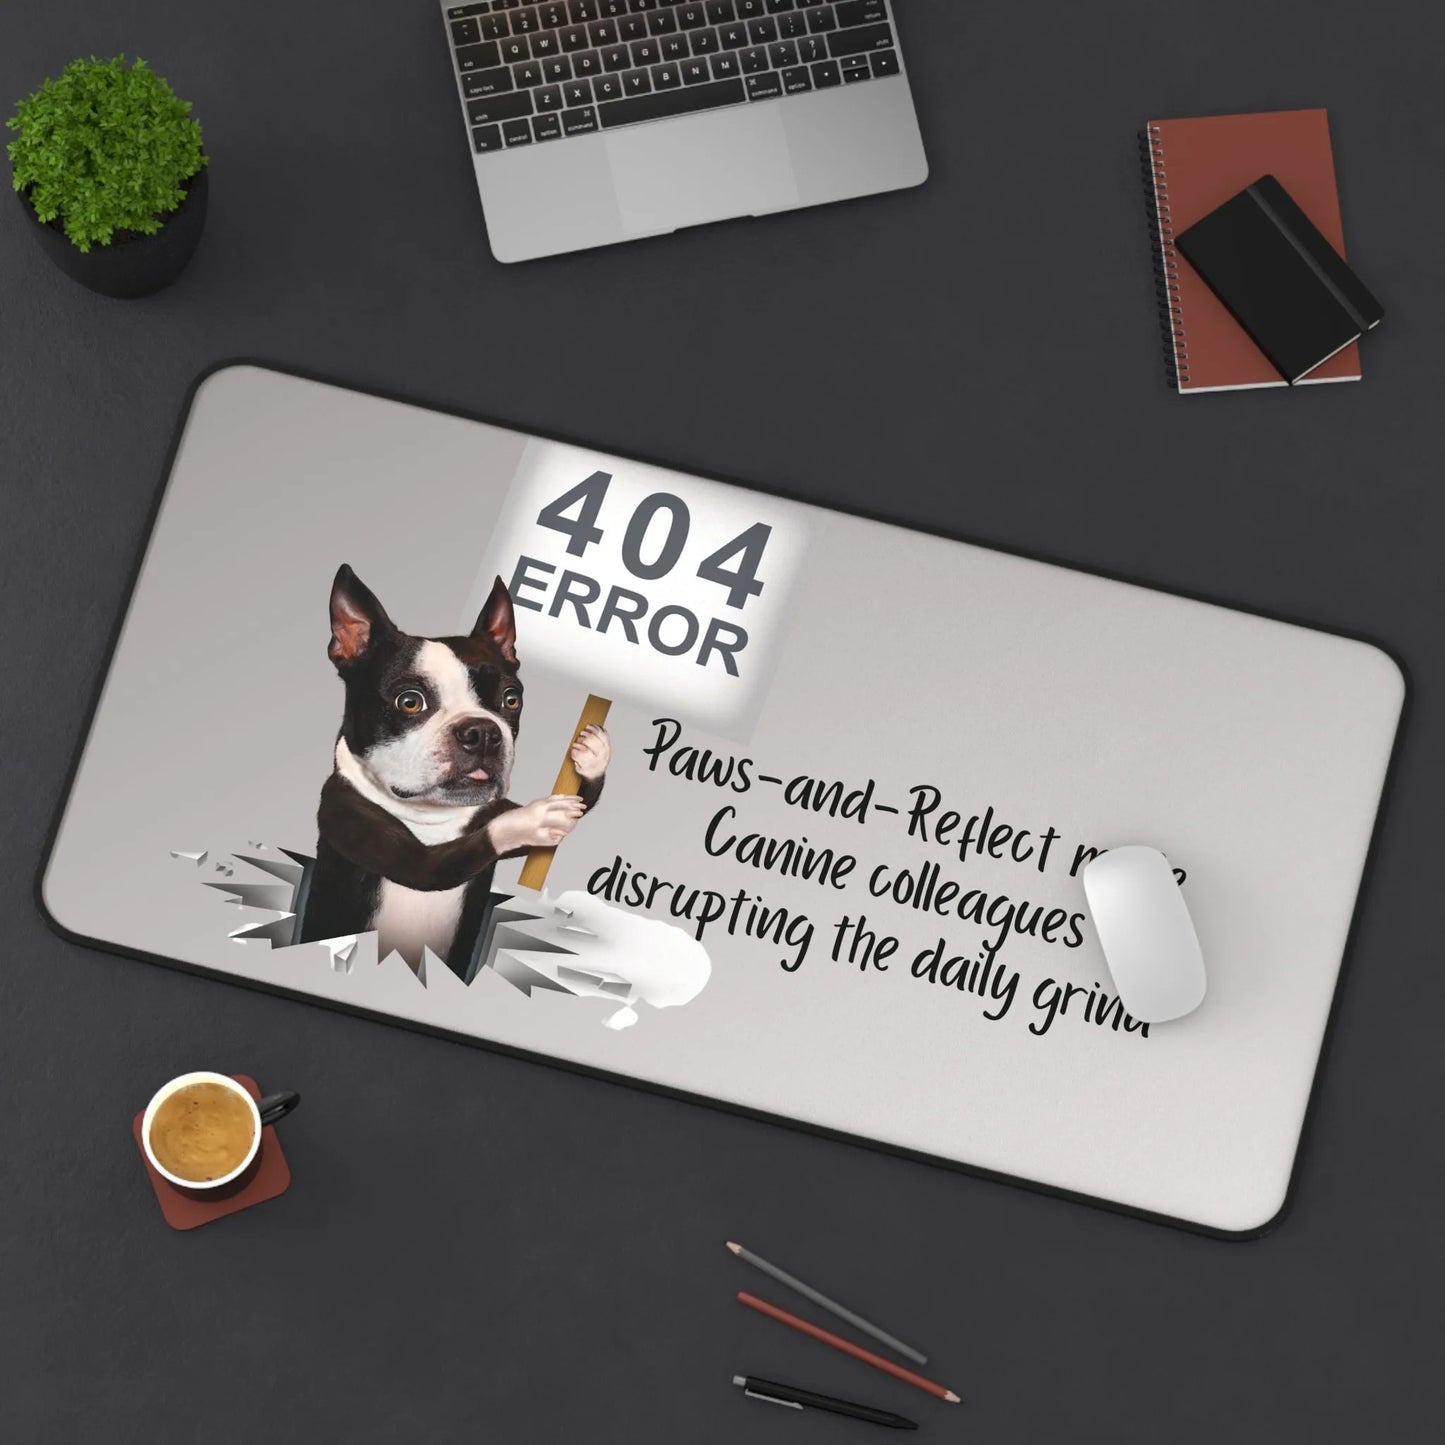 Paws & Reflect Humorous Dog Desk Mat - 401 Error Paws & Reflect Desk Mat large